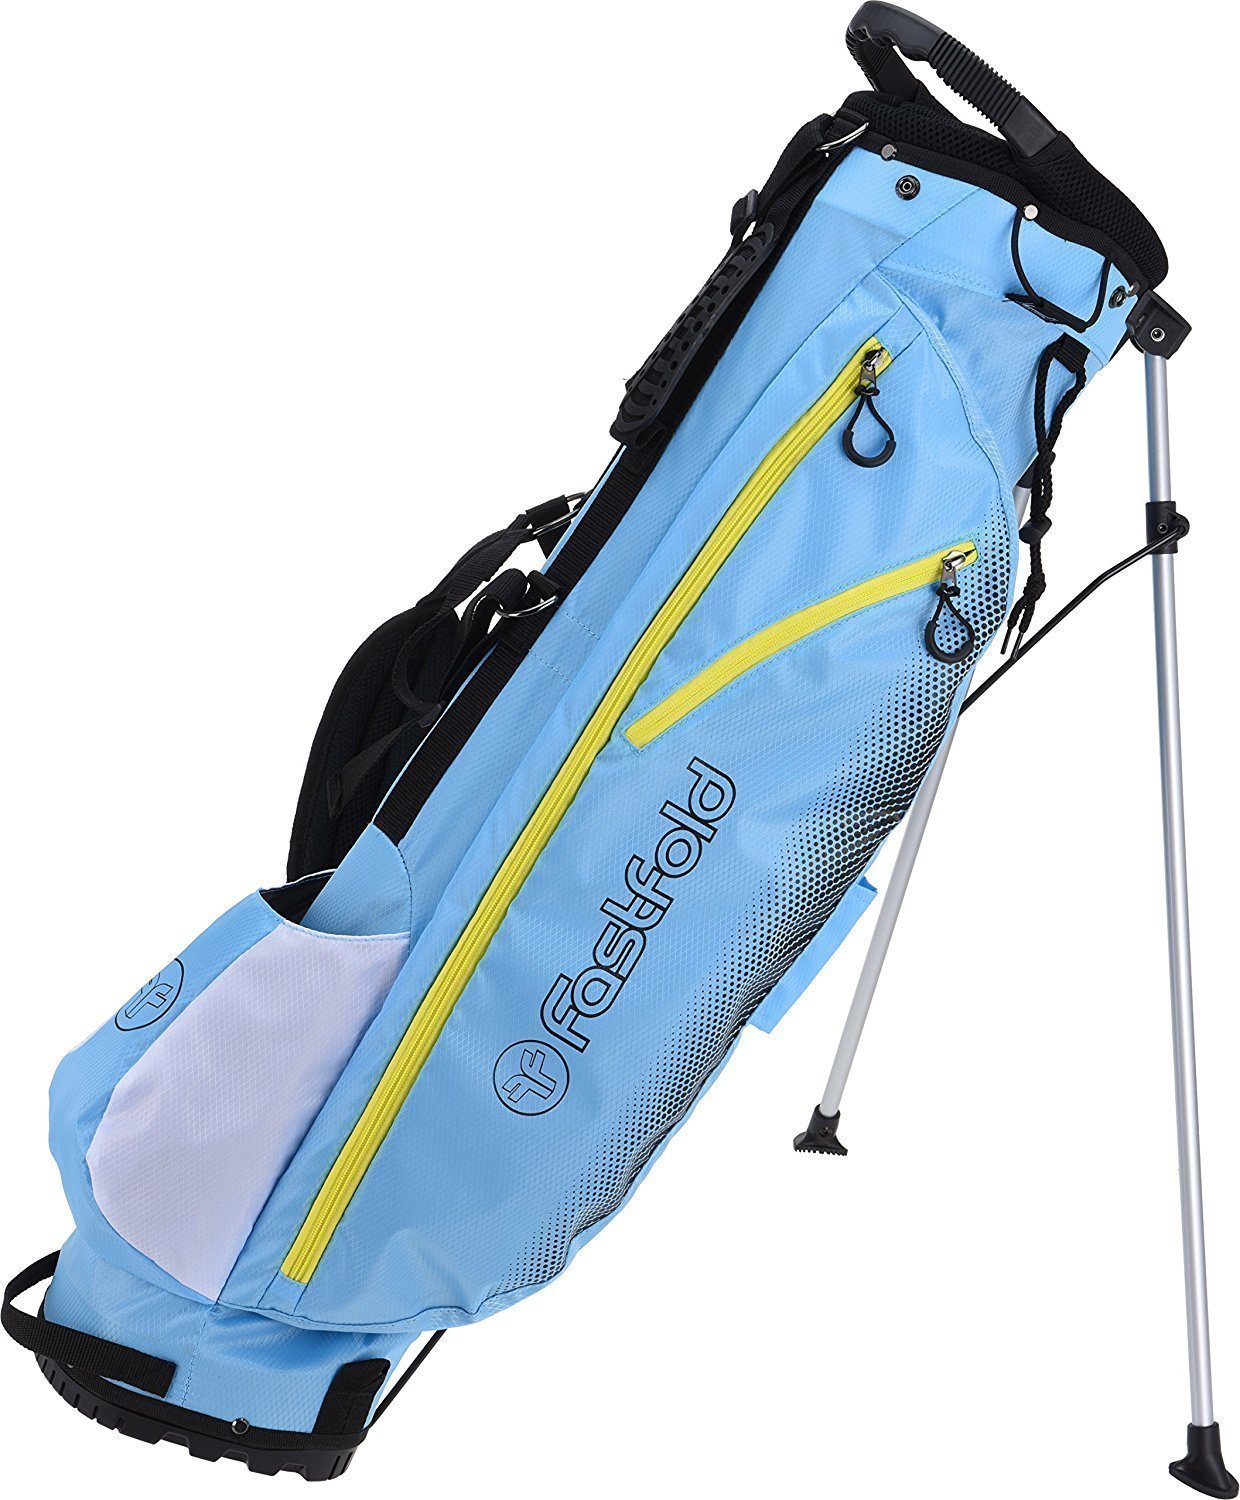 Saco de golfe Fastfold UL 7.0 Aqua/Neon/White Stand Bag